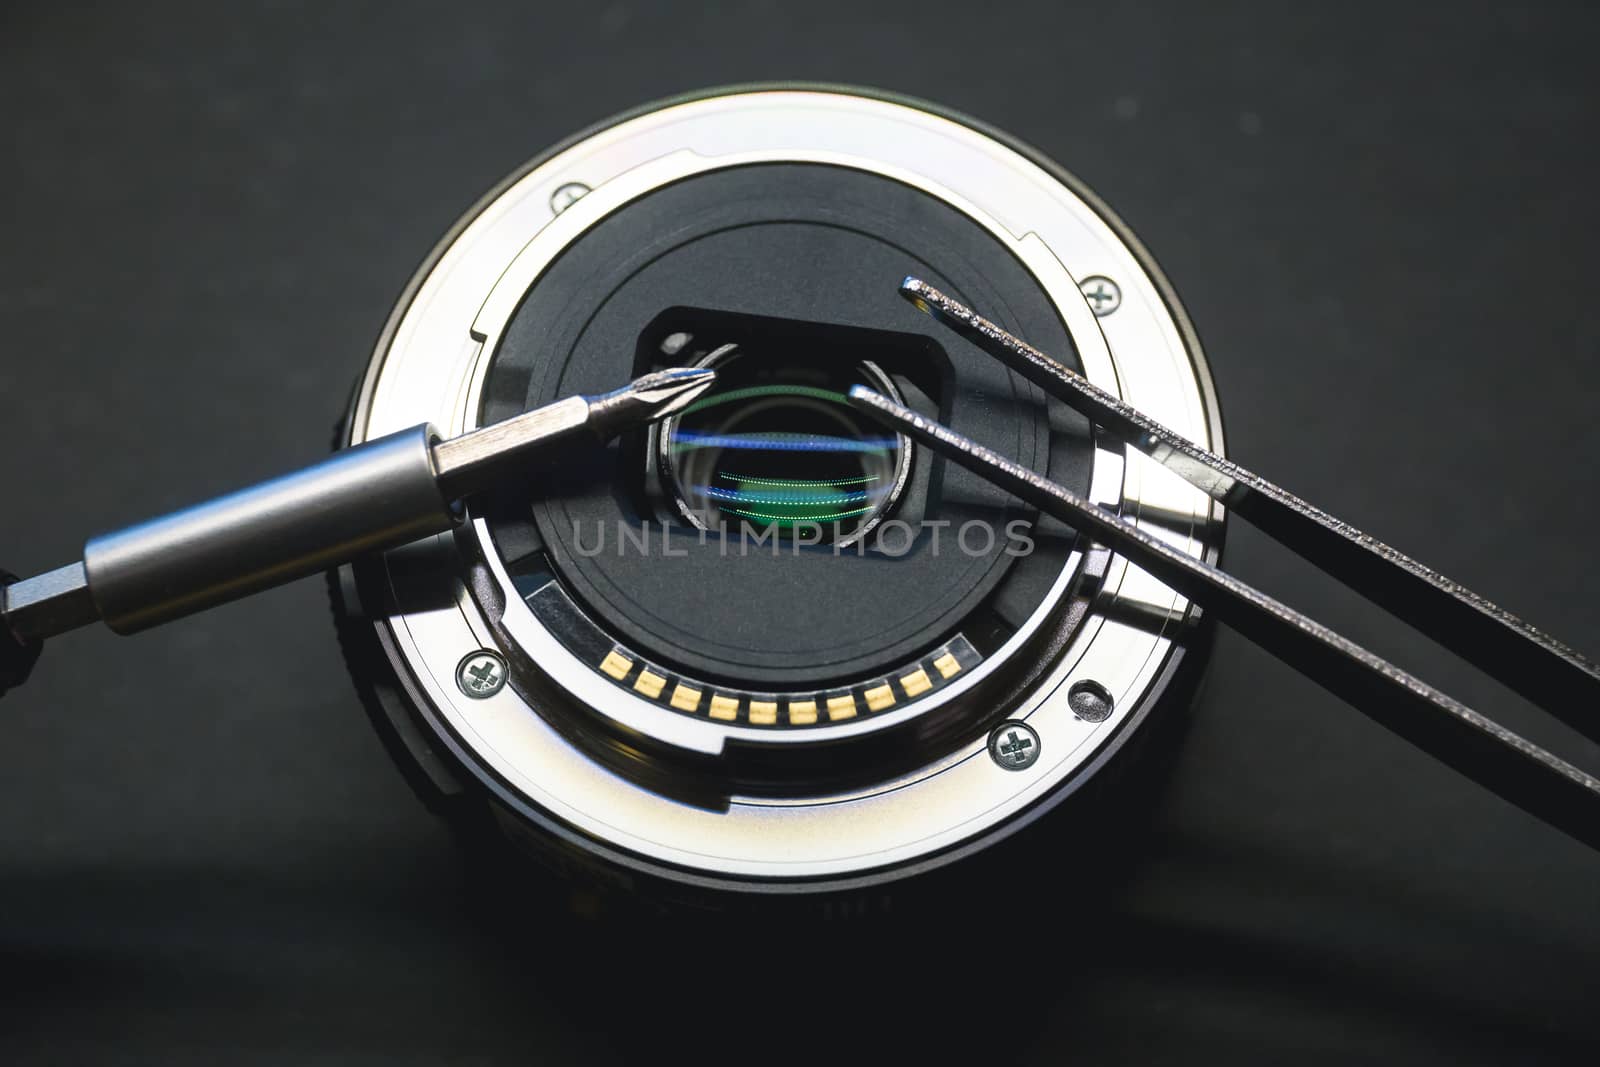 Disassemble and repair process of professional modern digital camera lens. Disassembled camera lens